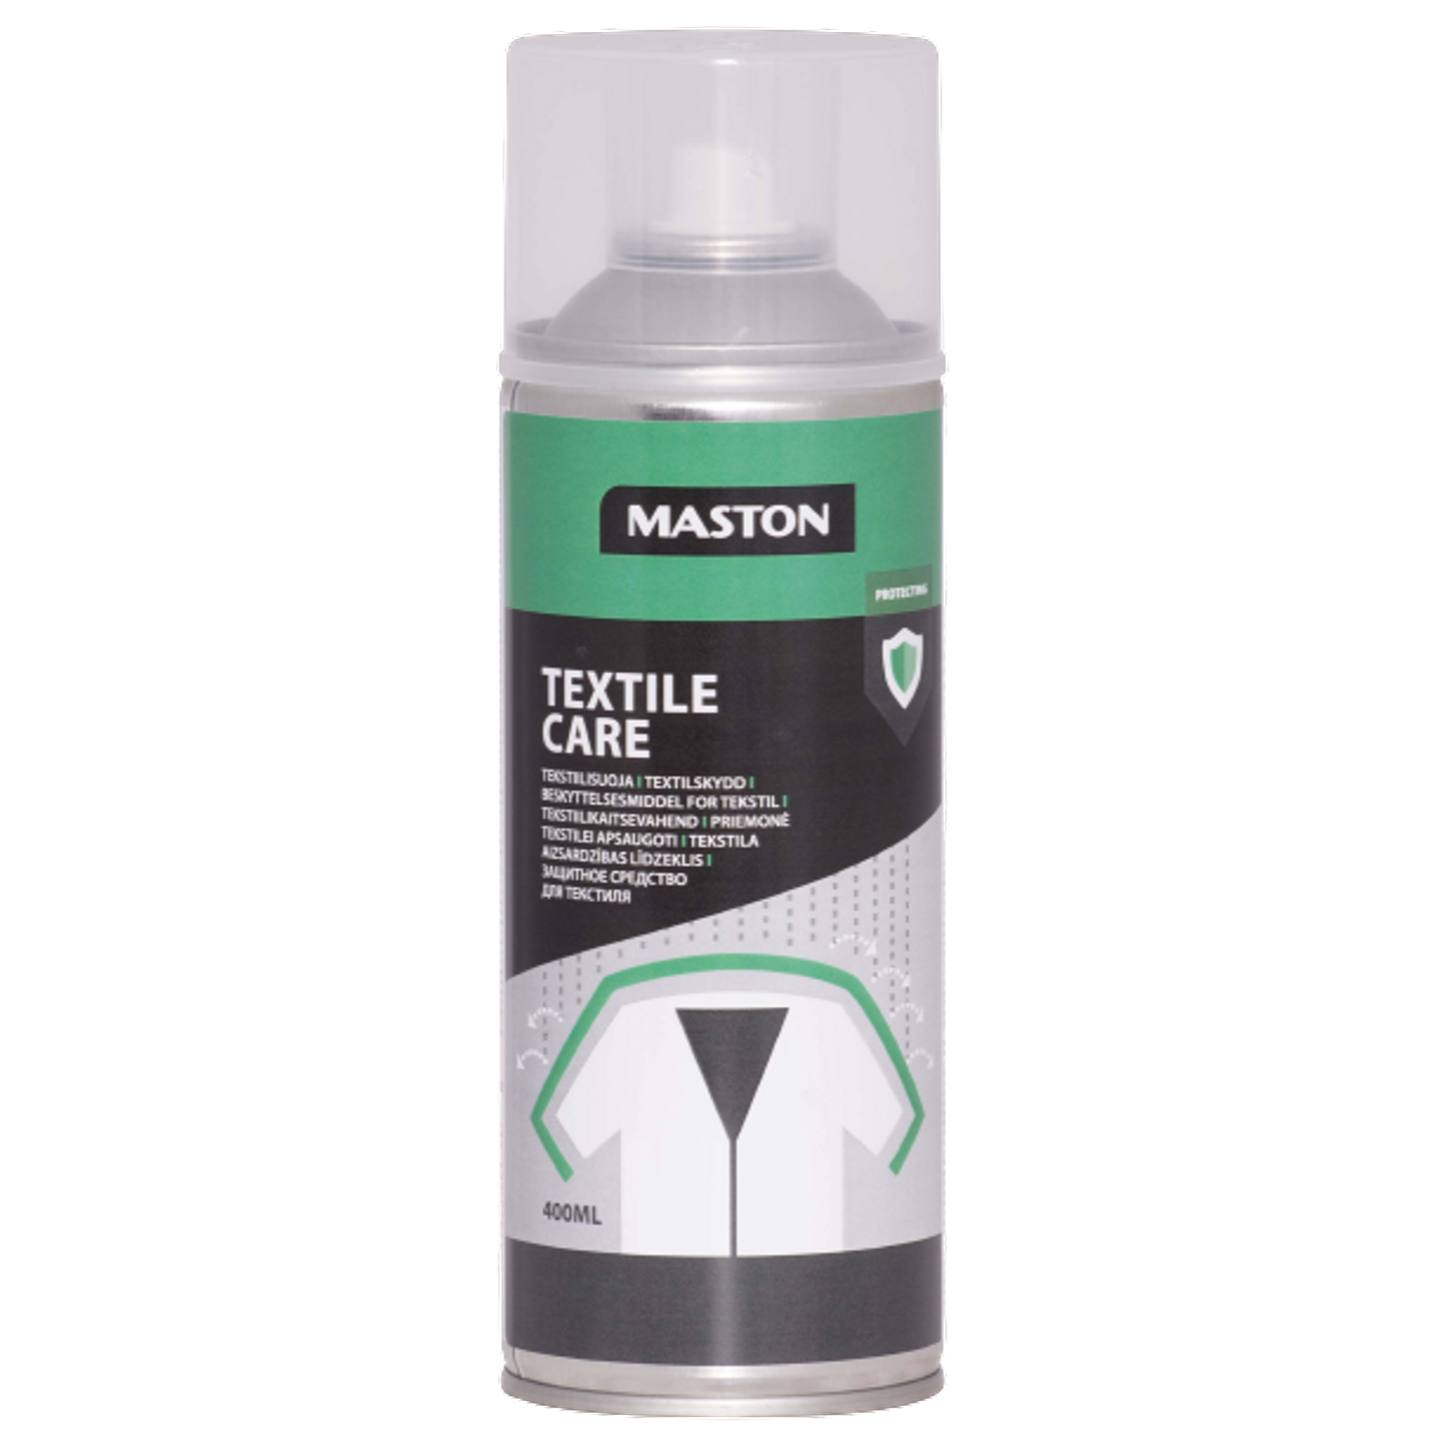 Maston TEXTILE CARE - ochrana textilu 400ml